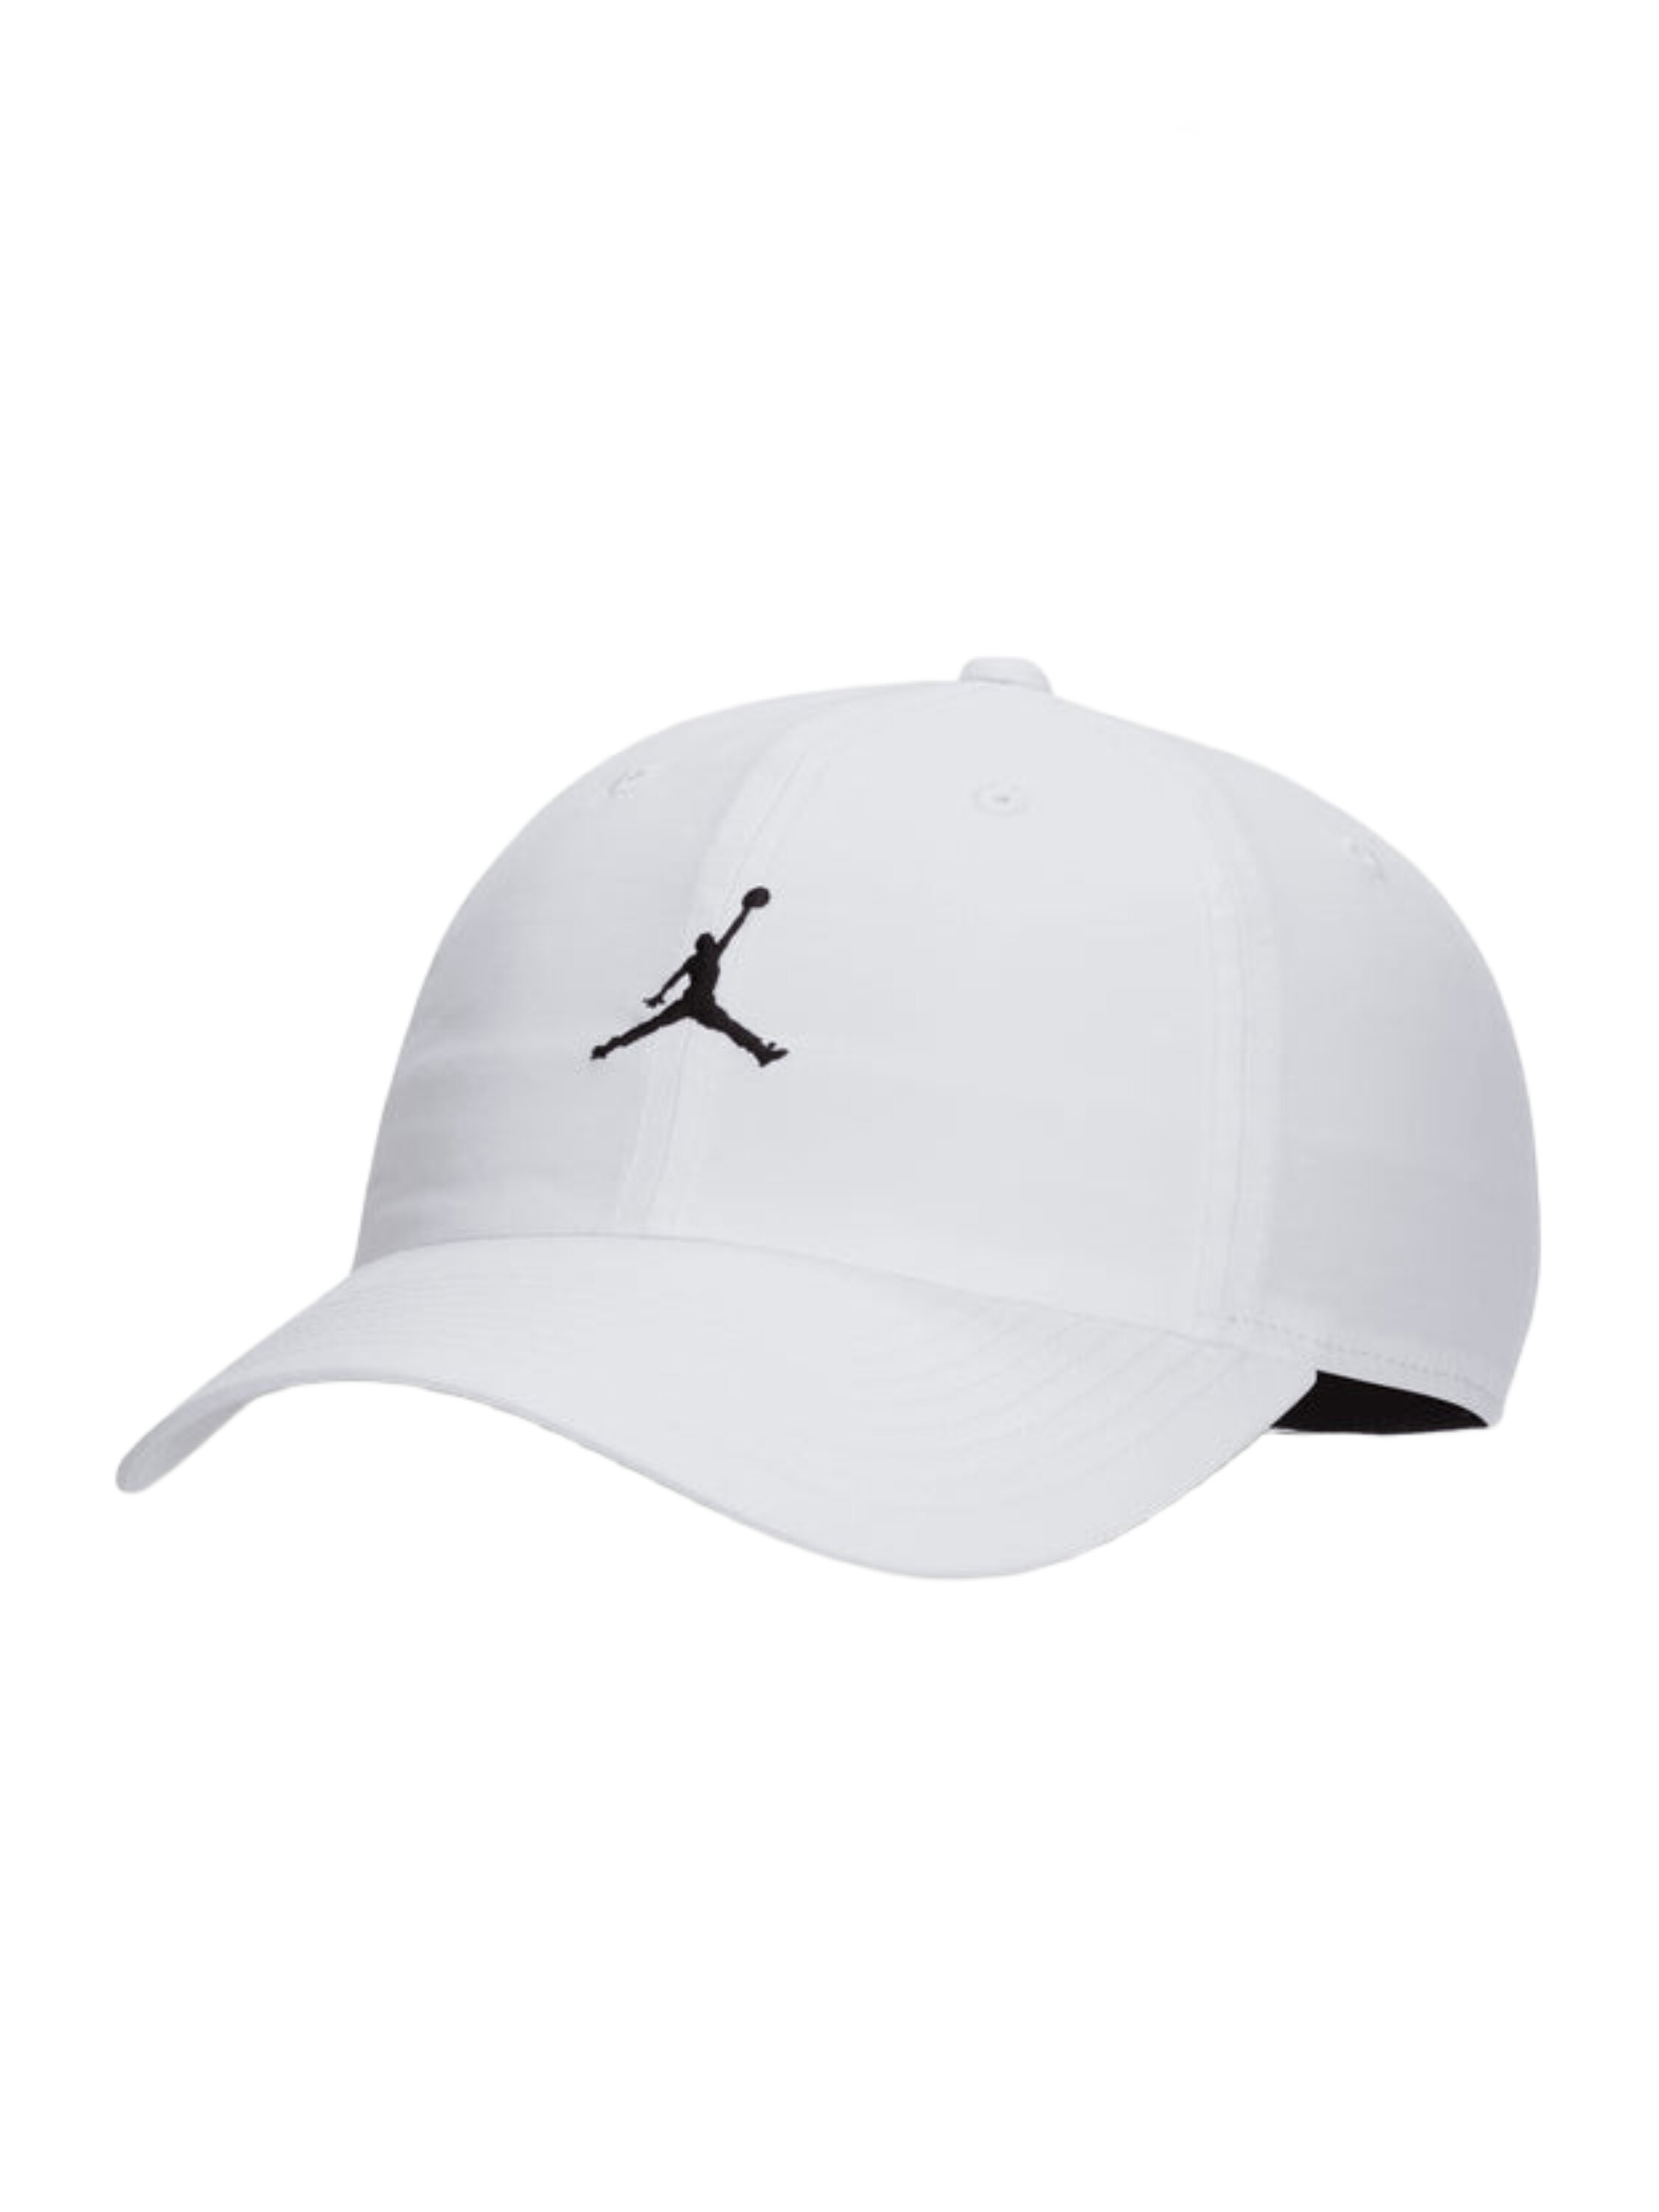 Бейсболка унисекс Nike Jordan Club Cap Adjustable Unstructured Hat белая, р. S/M